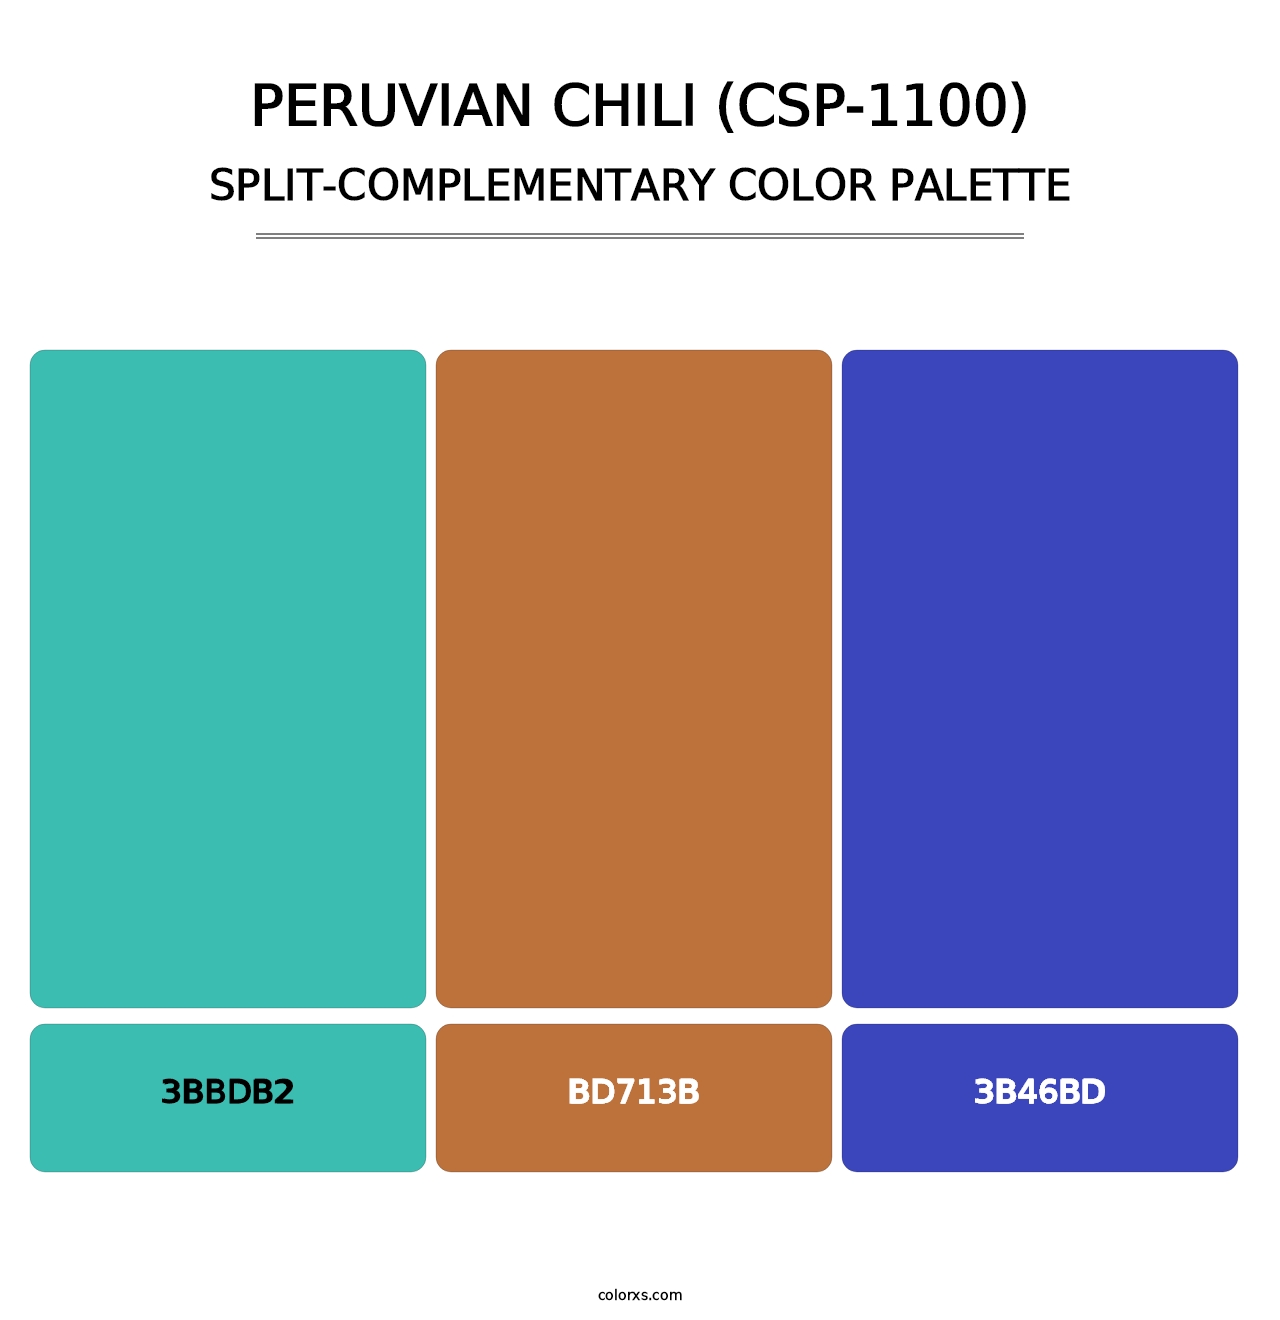 Peruvian Chili (CSP-1100) - Split-Complementary Color Palette